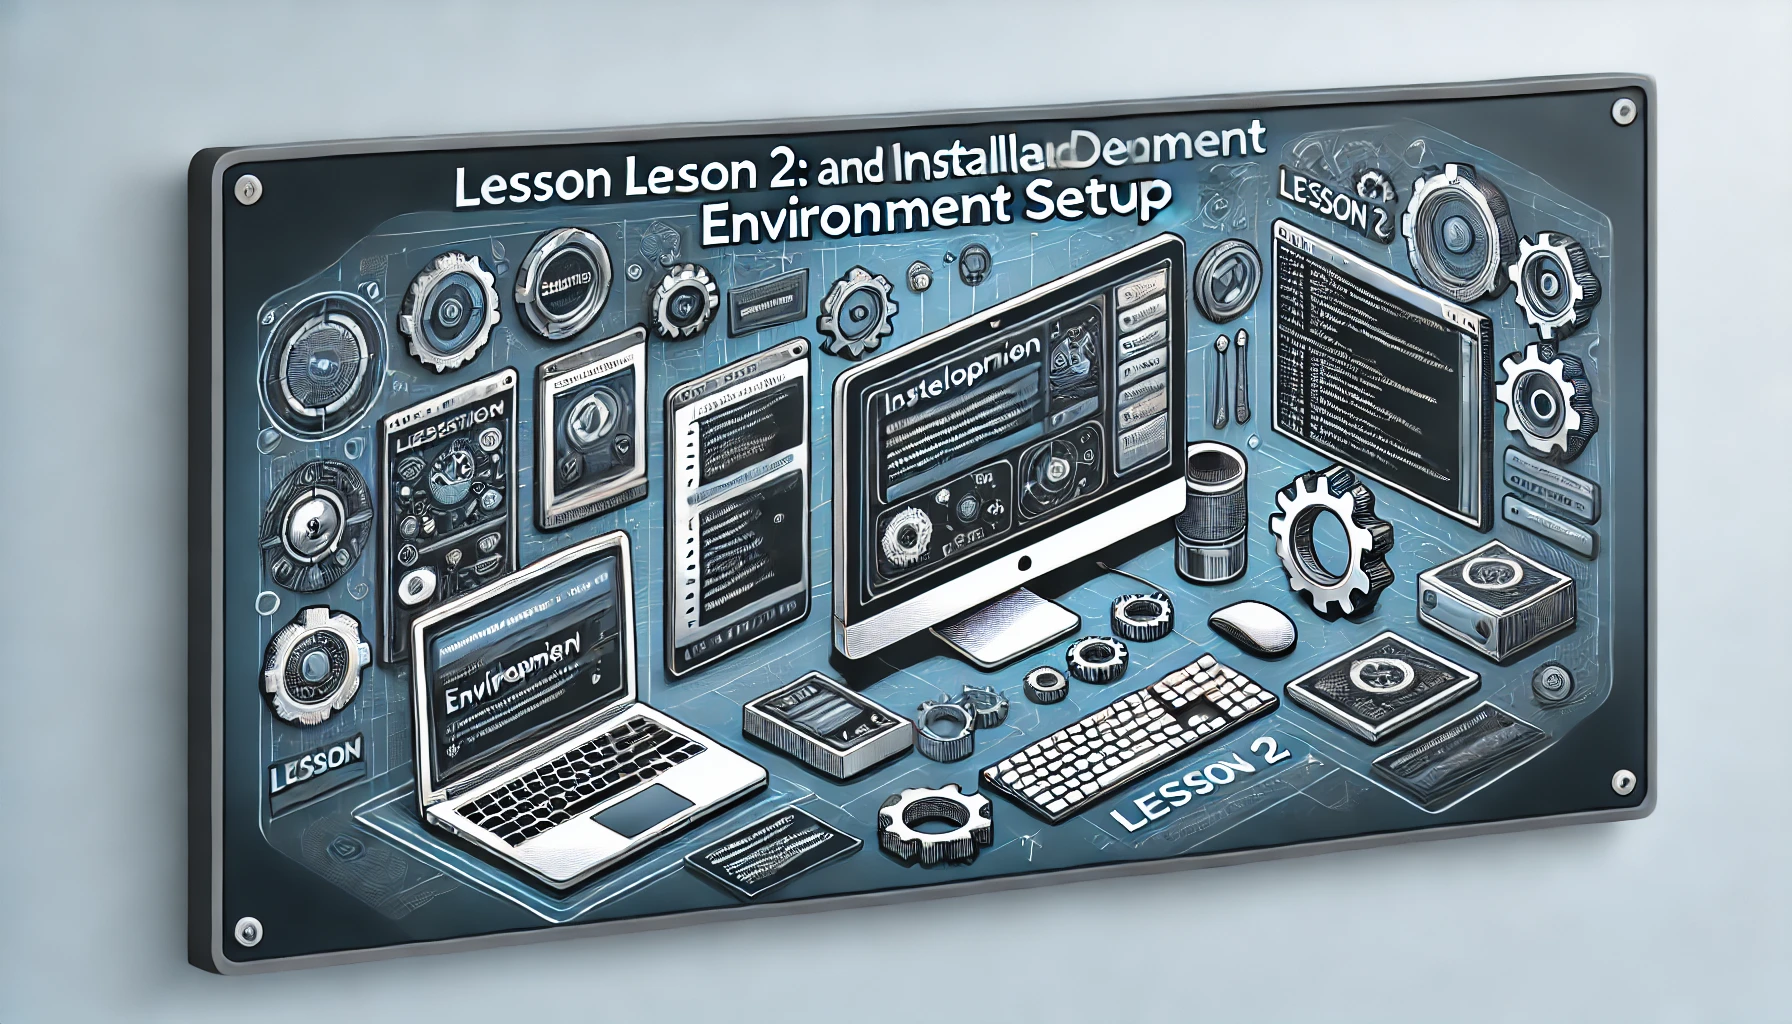 Lesson 2 - Installation and Development Environment Setup